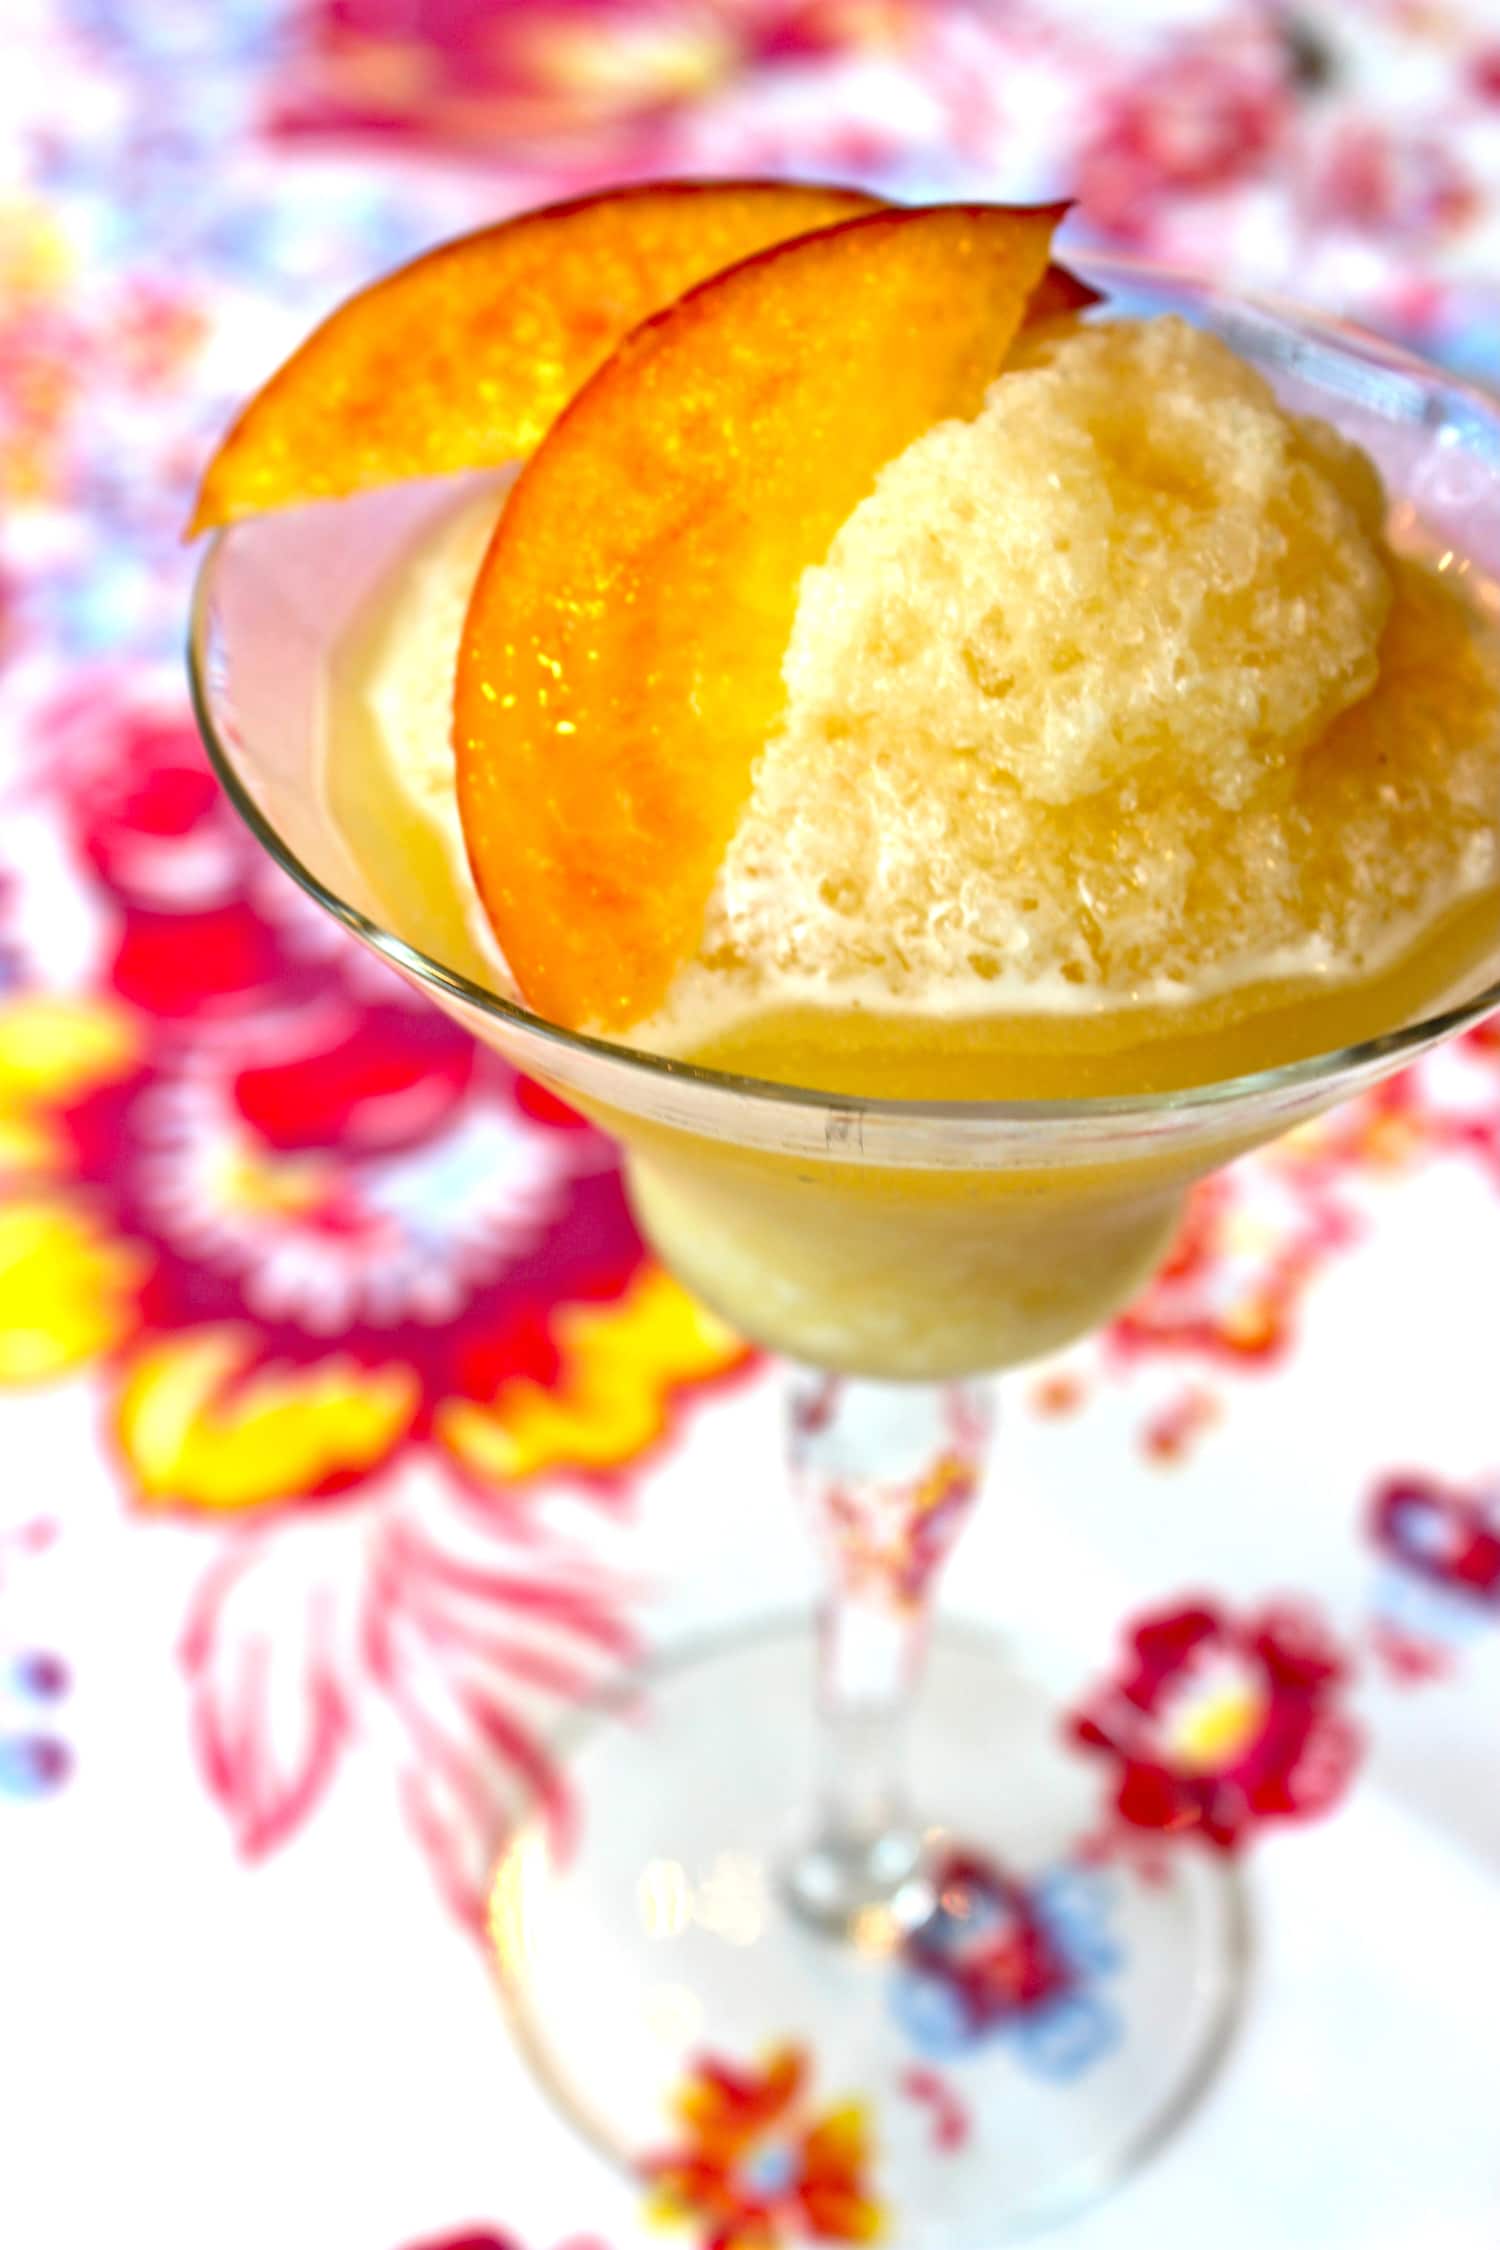 Why I Love Summer, Plus Recipe! Frozen Peach Daiquiris | Kitchn